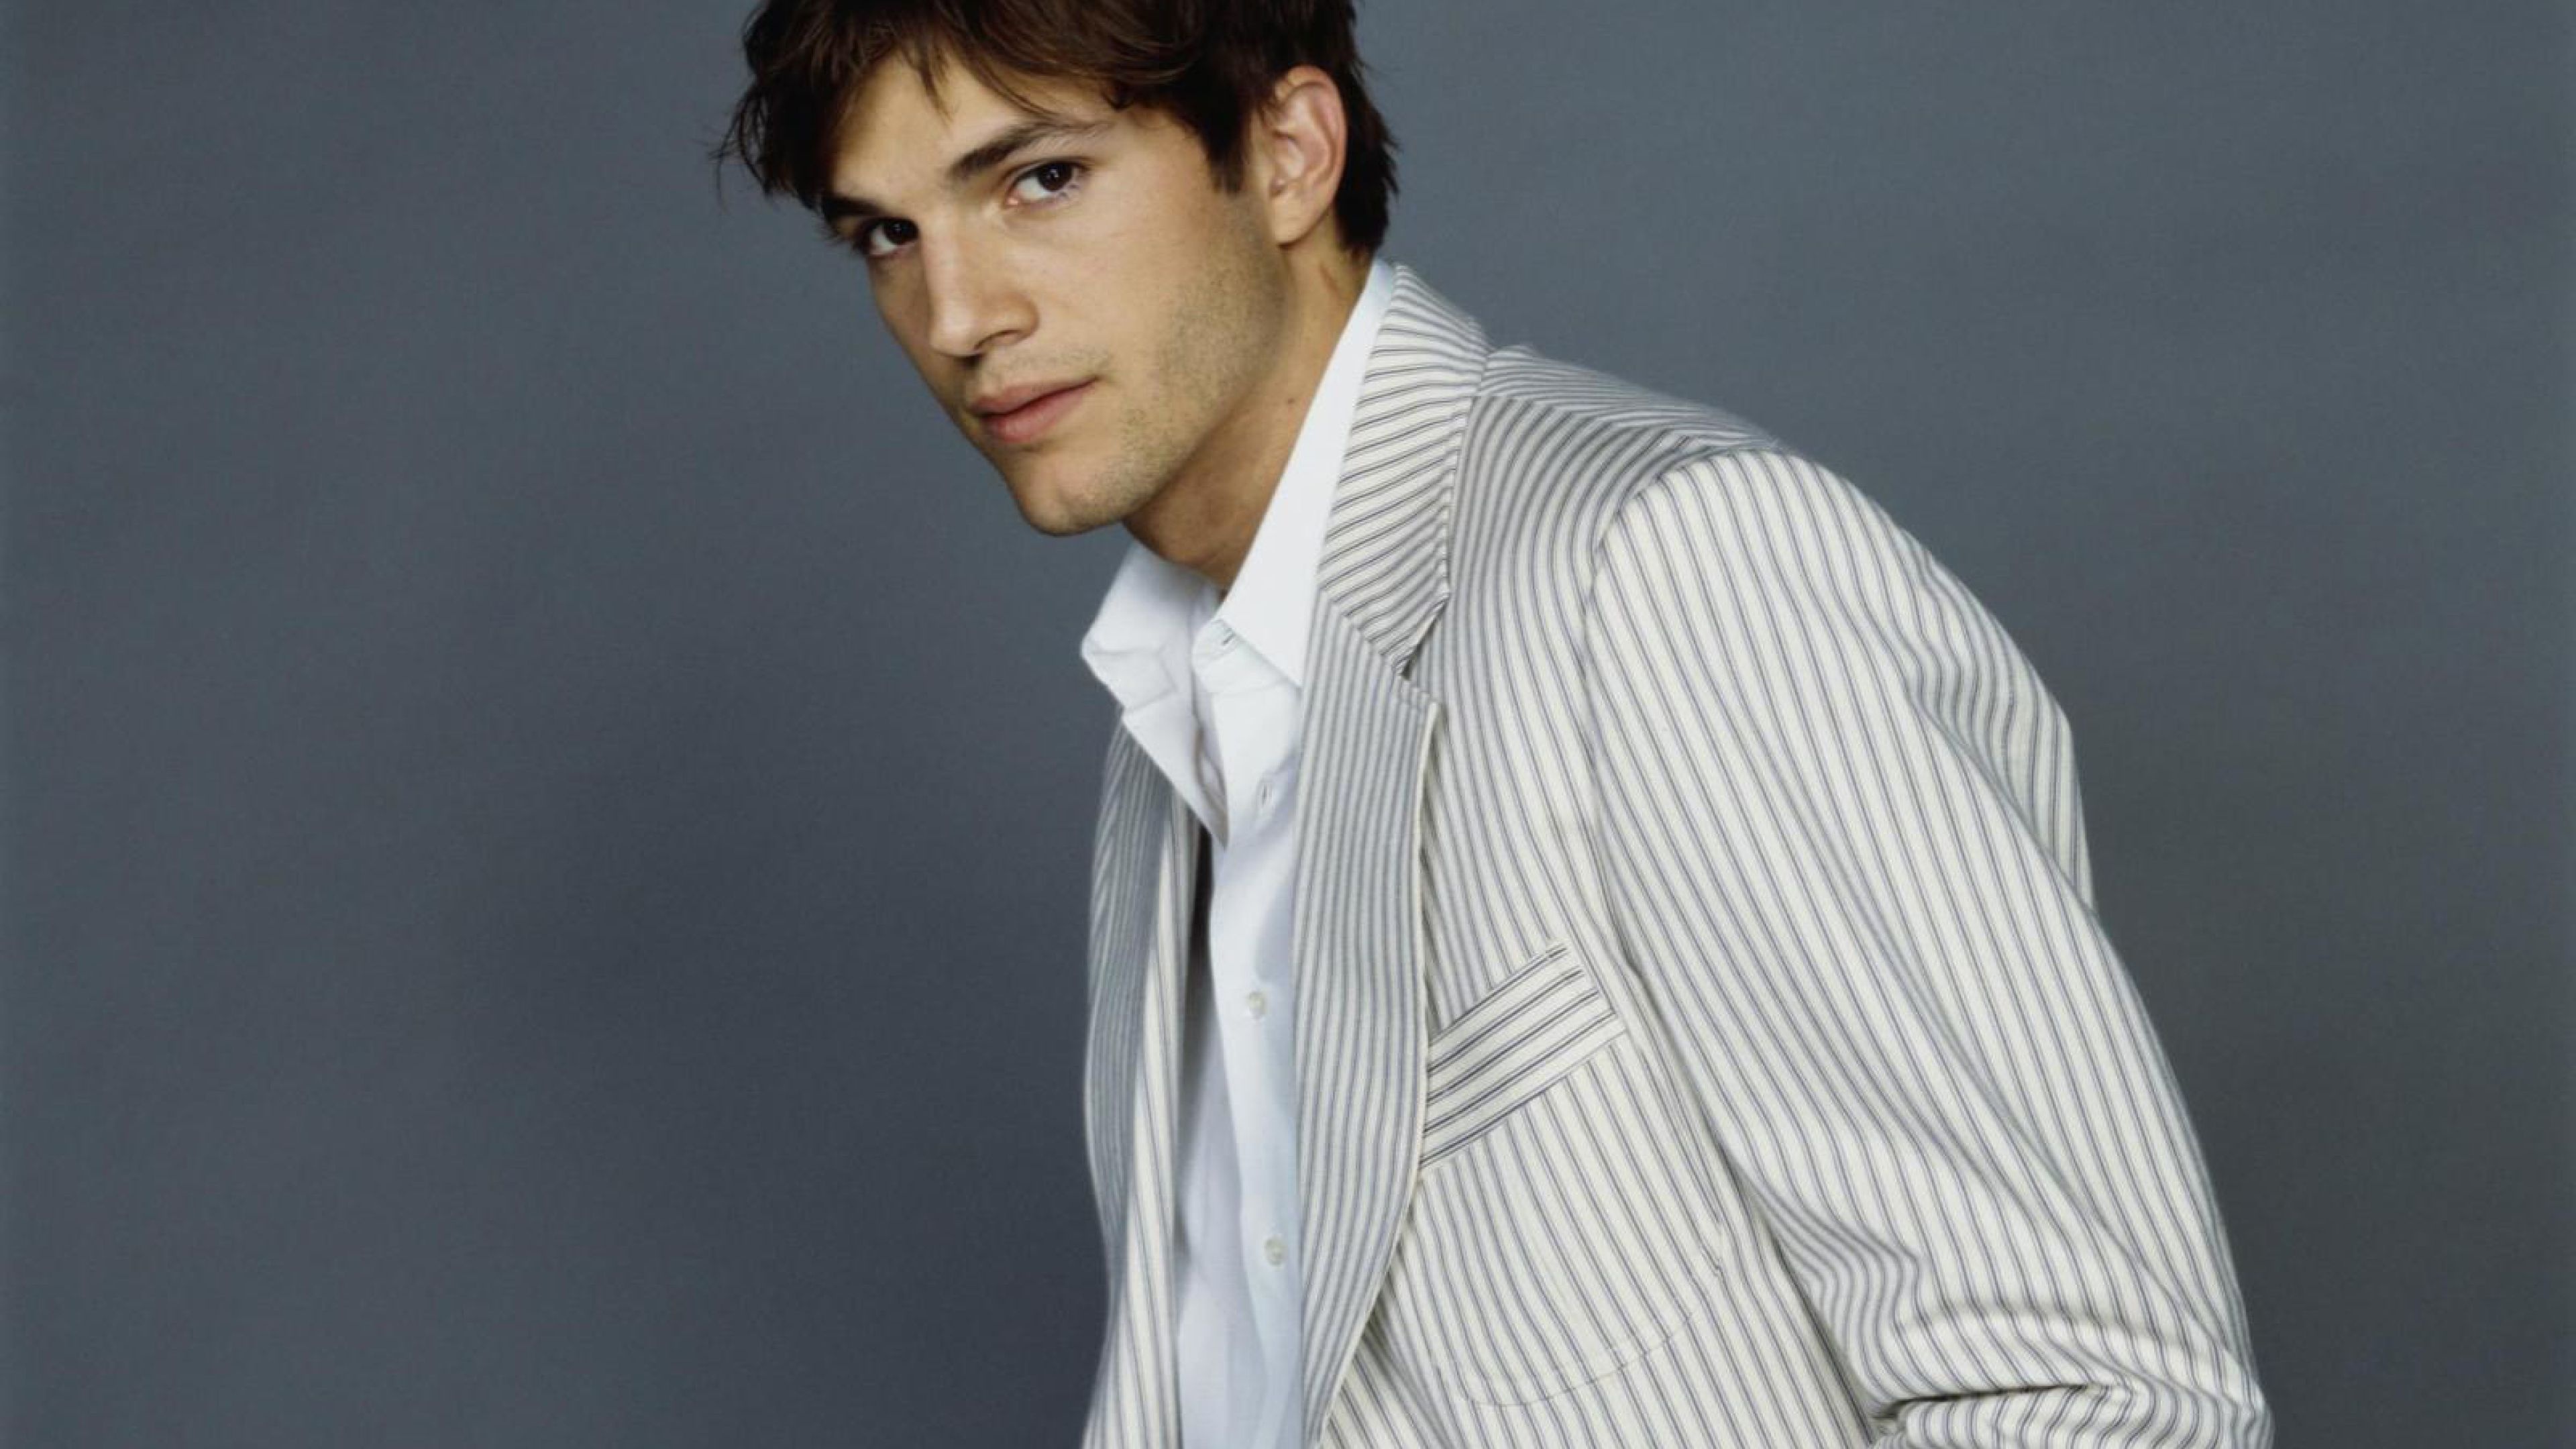 Ashton Kutcher and Mila Kunis: An American actor, producer, entrepreneur, and former model. 3840x2160 4K Background.